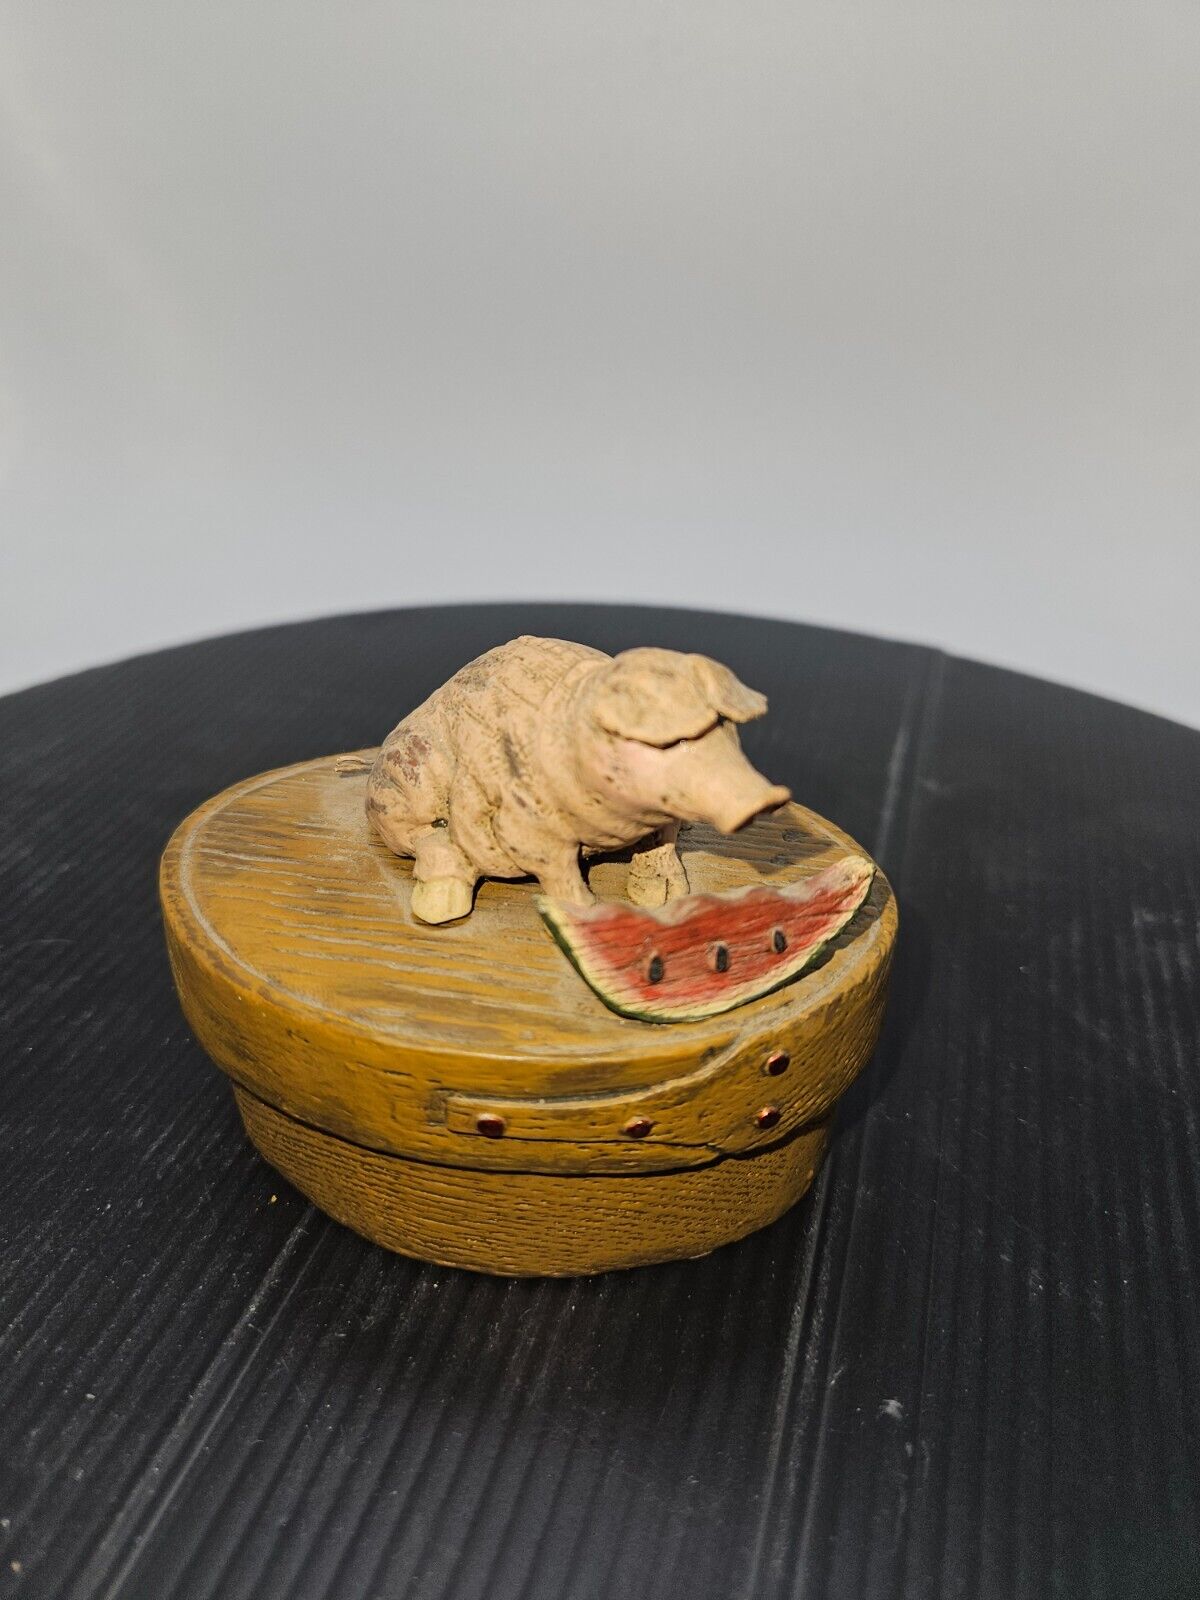 American Chestnut Folk Art Pig Shaker Candle Box AM1605 2002 Coynes & Company 